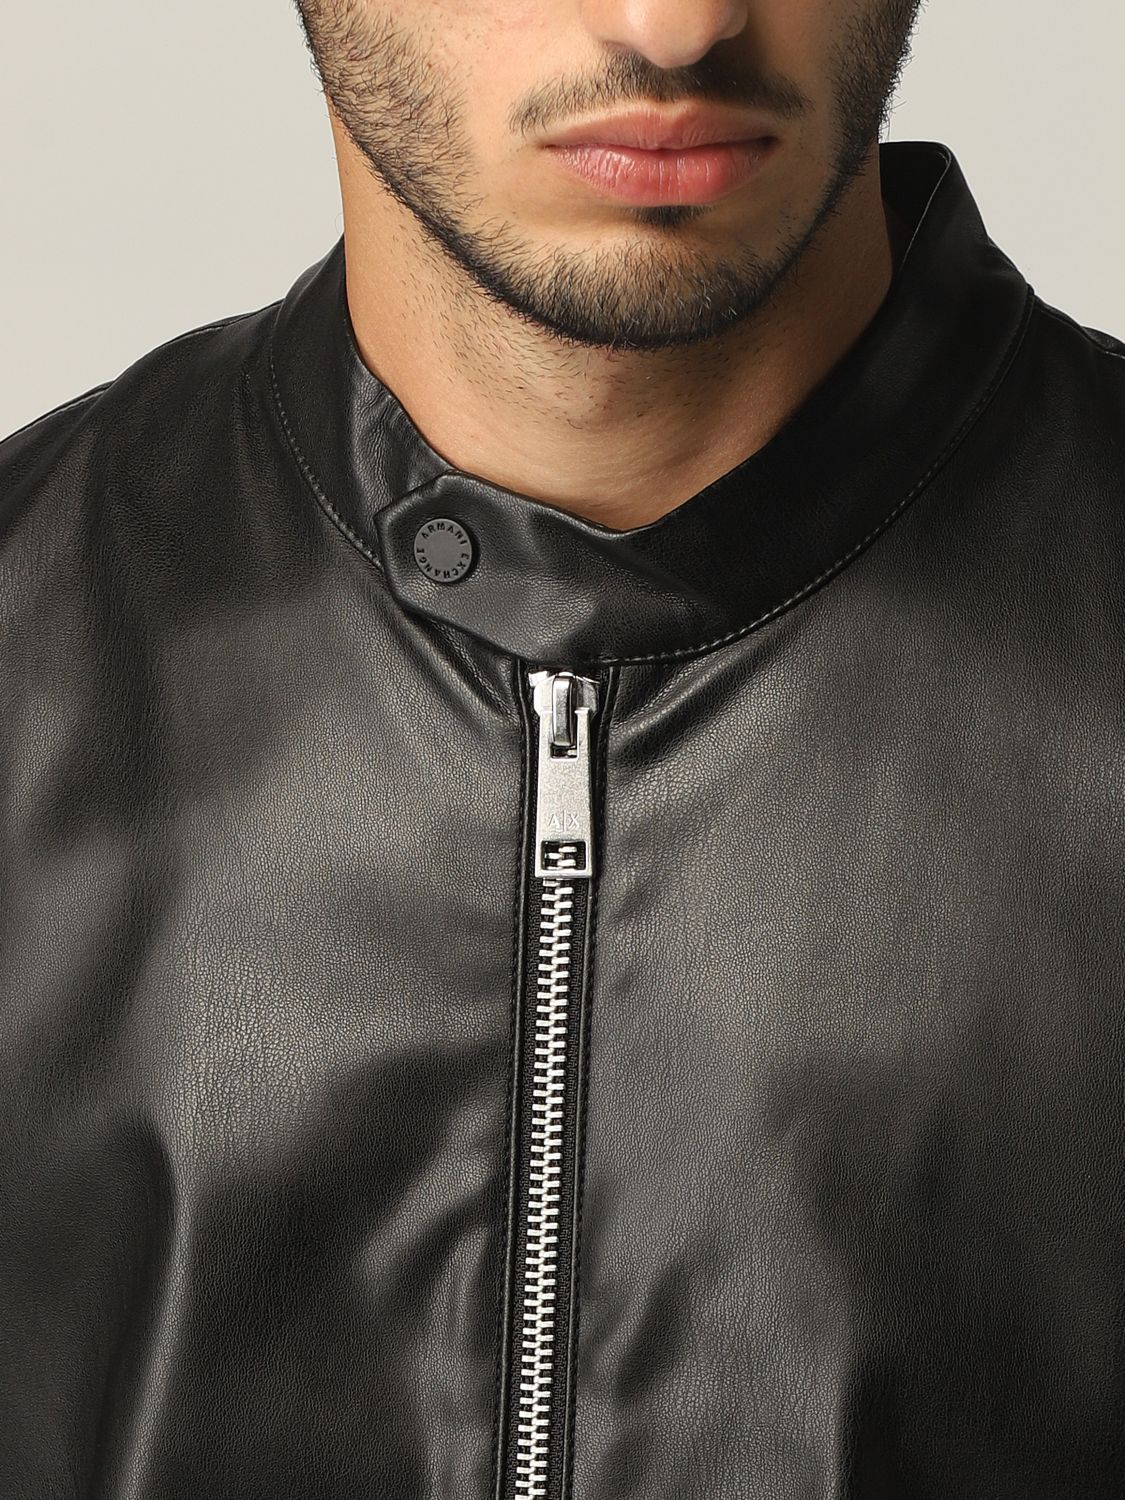 Armani Exchange Leather Jacket Sale Online, SAVE 35% 